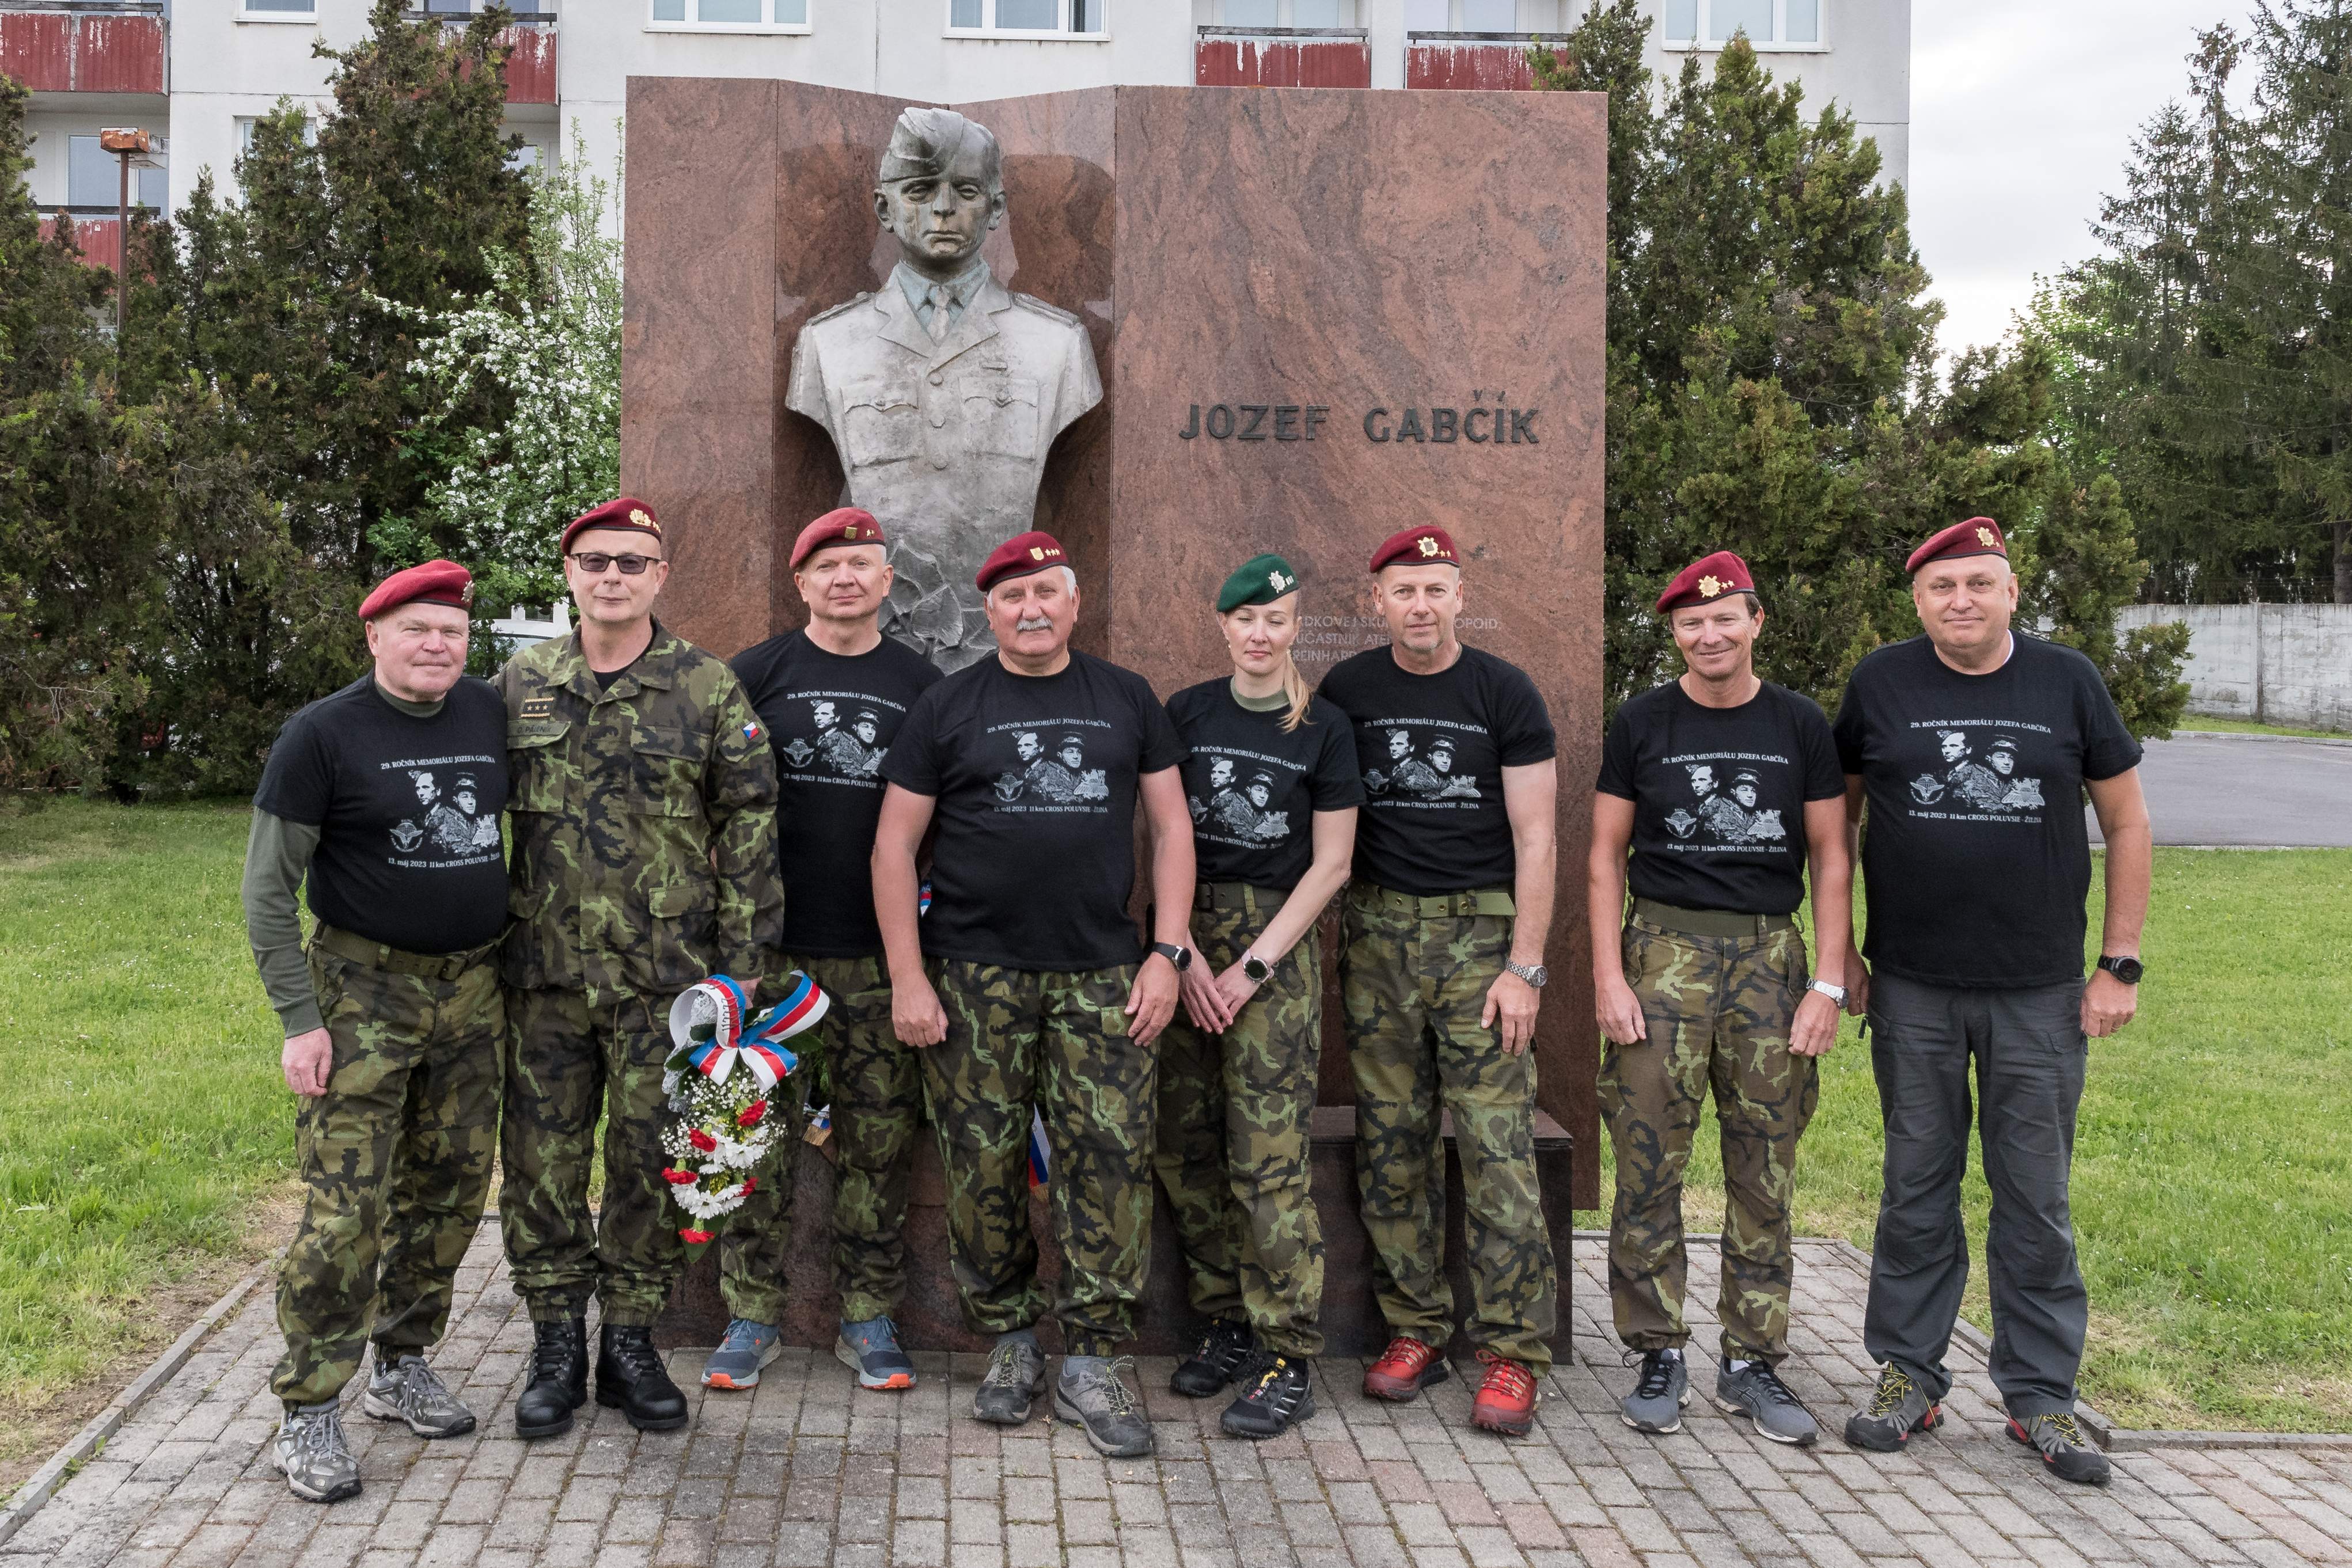 Zúčastnili jsme se 29. ročníku Memoriálu Jozefa Gabčíka – Cross Run 11 km